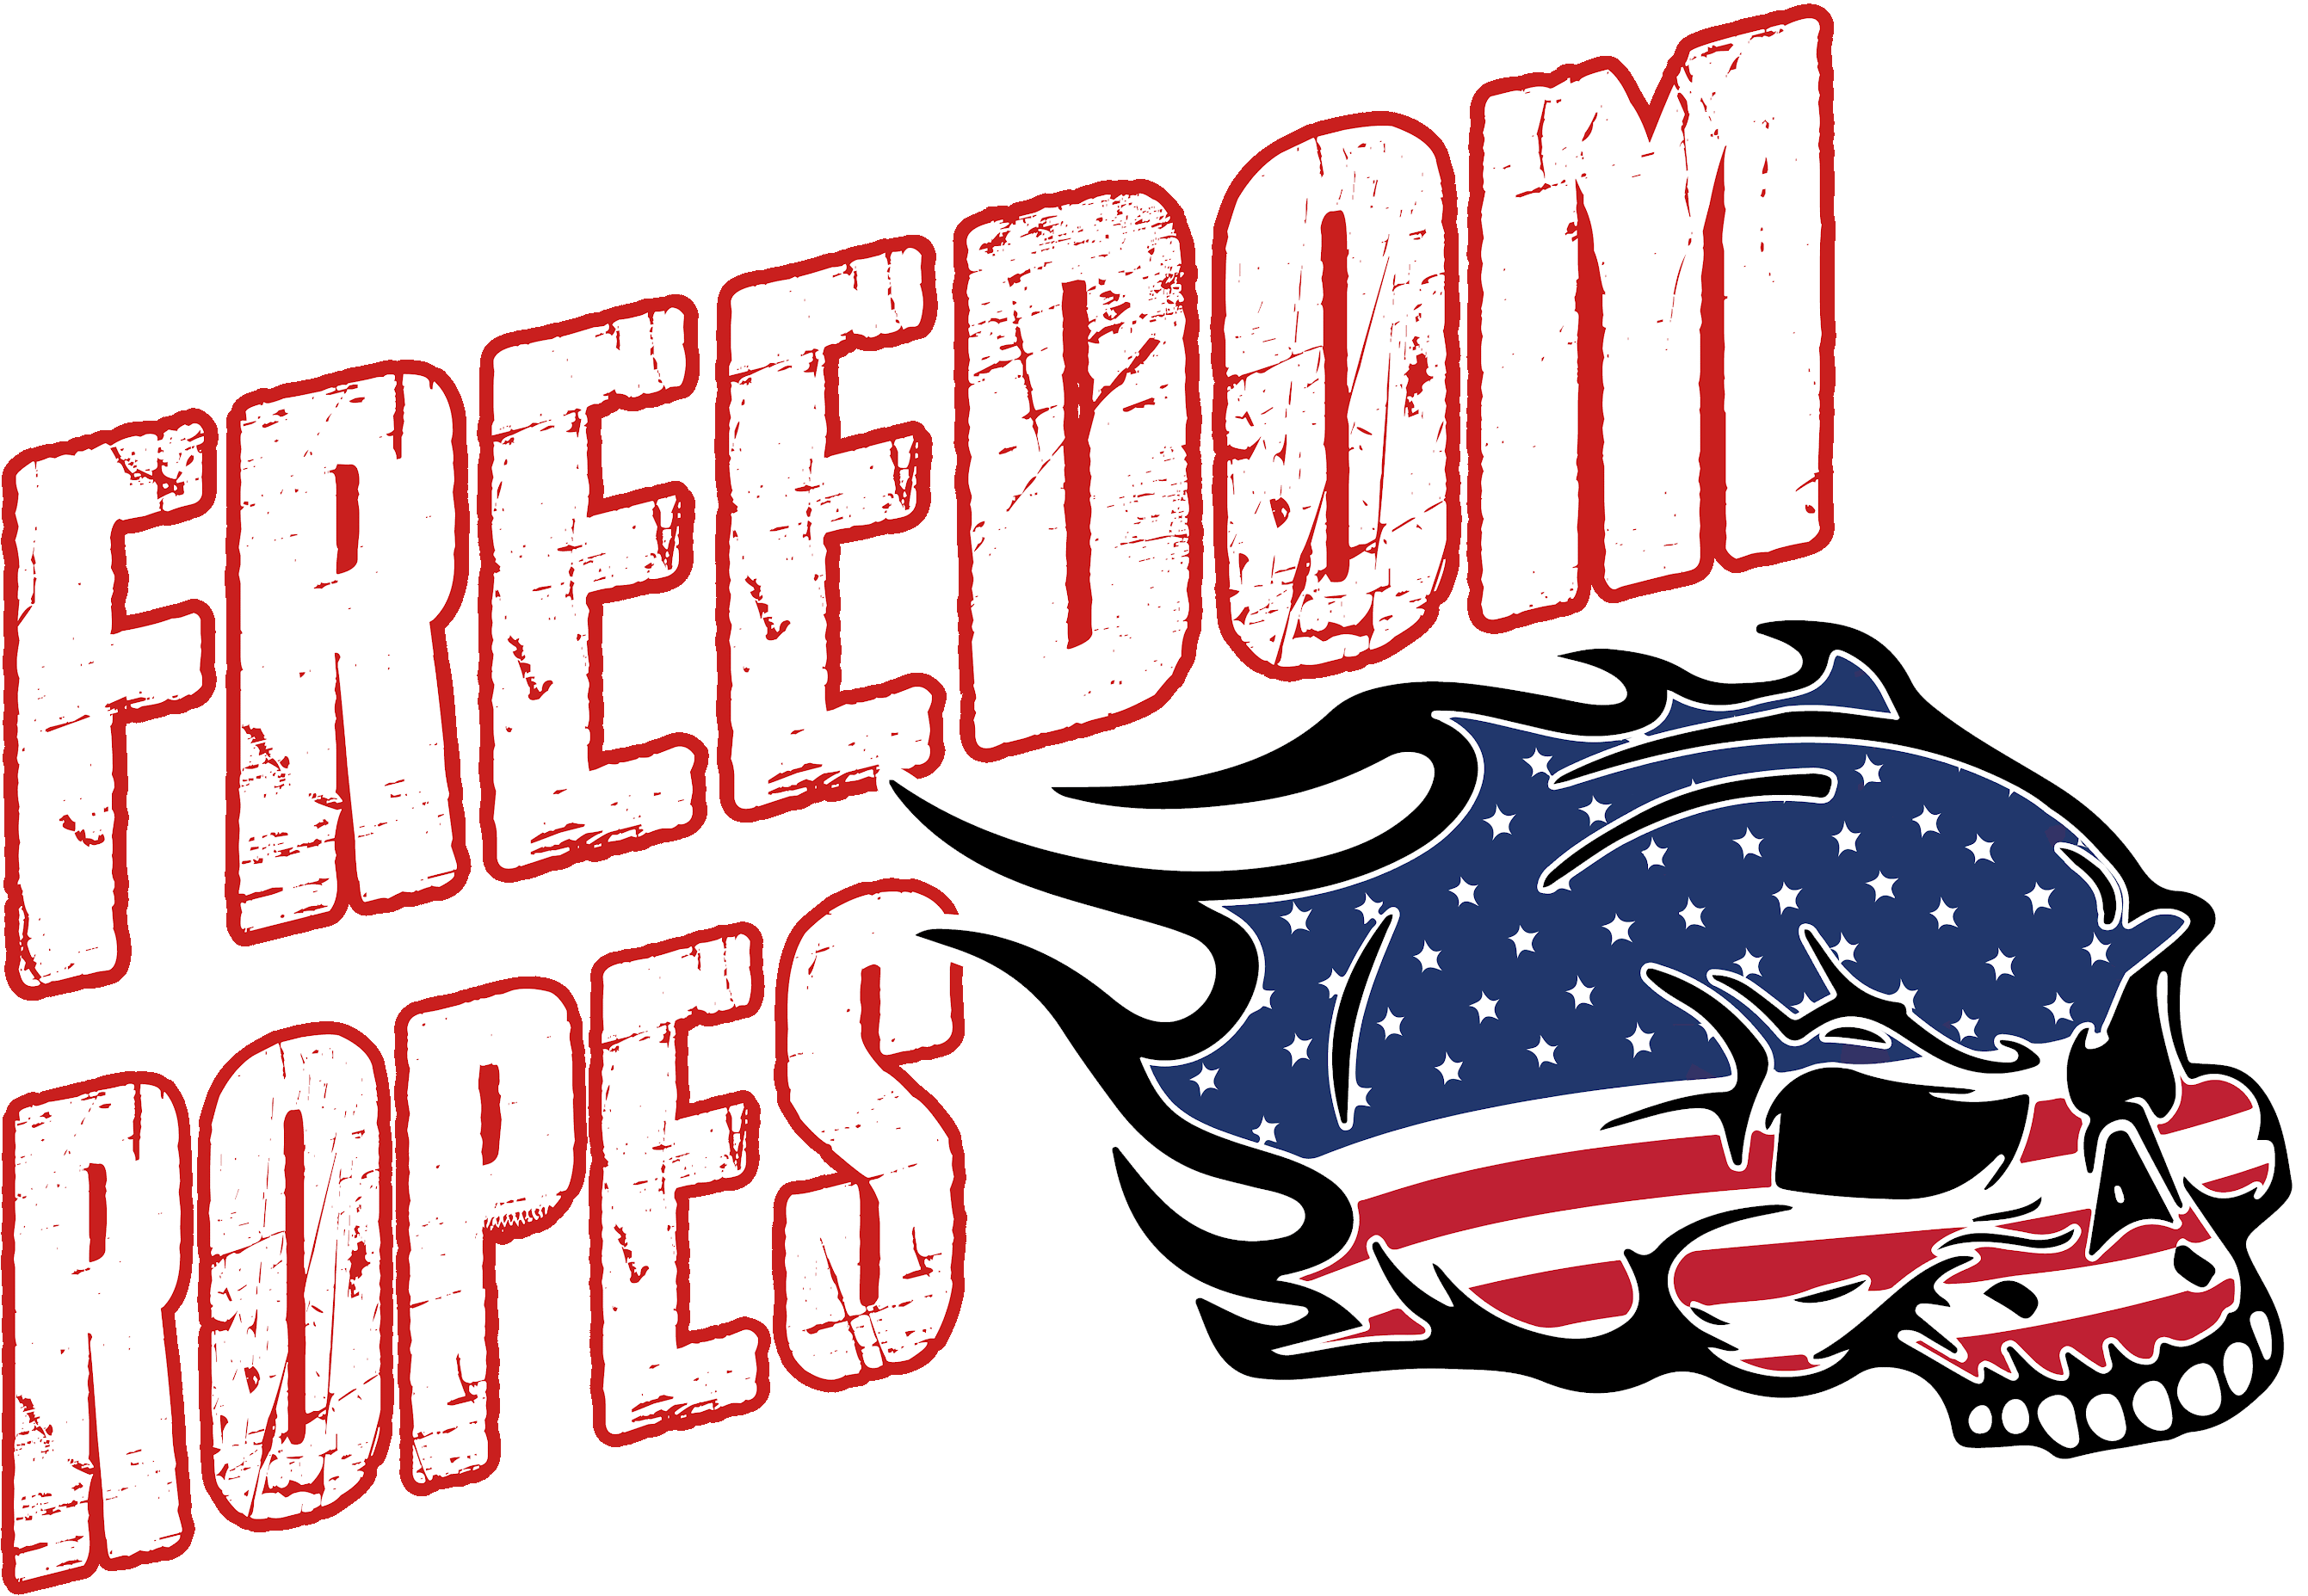 Freedom Ropes